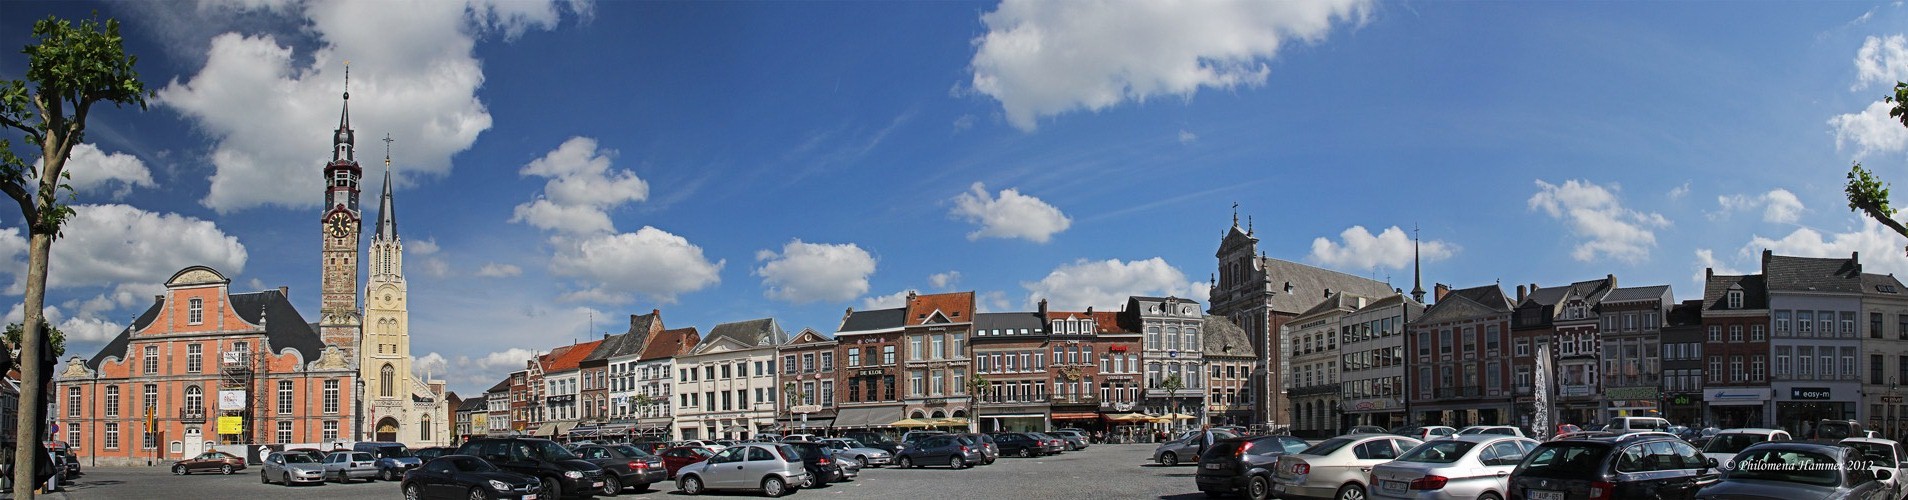 Belgien 2012 - Großer Markt in St. Truiden